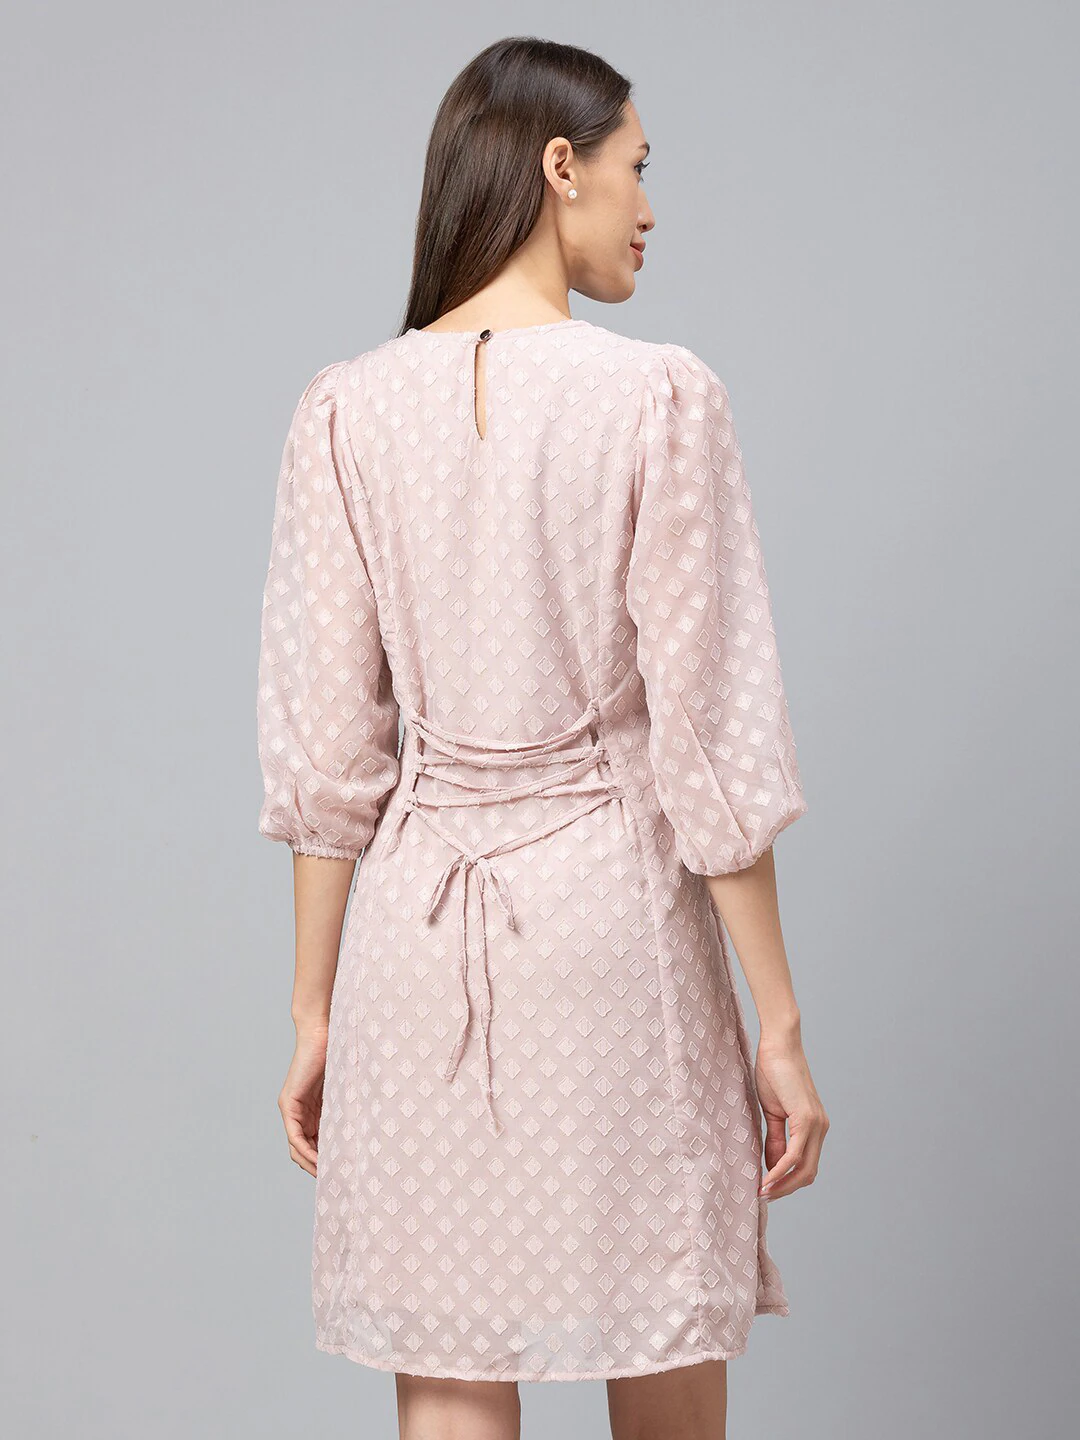 Globus Pink Self Design Dress